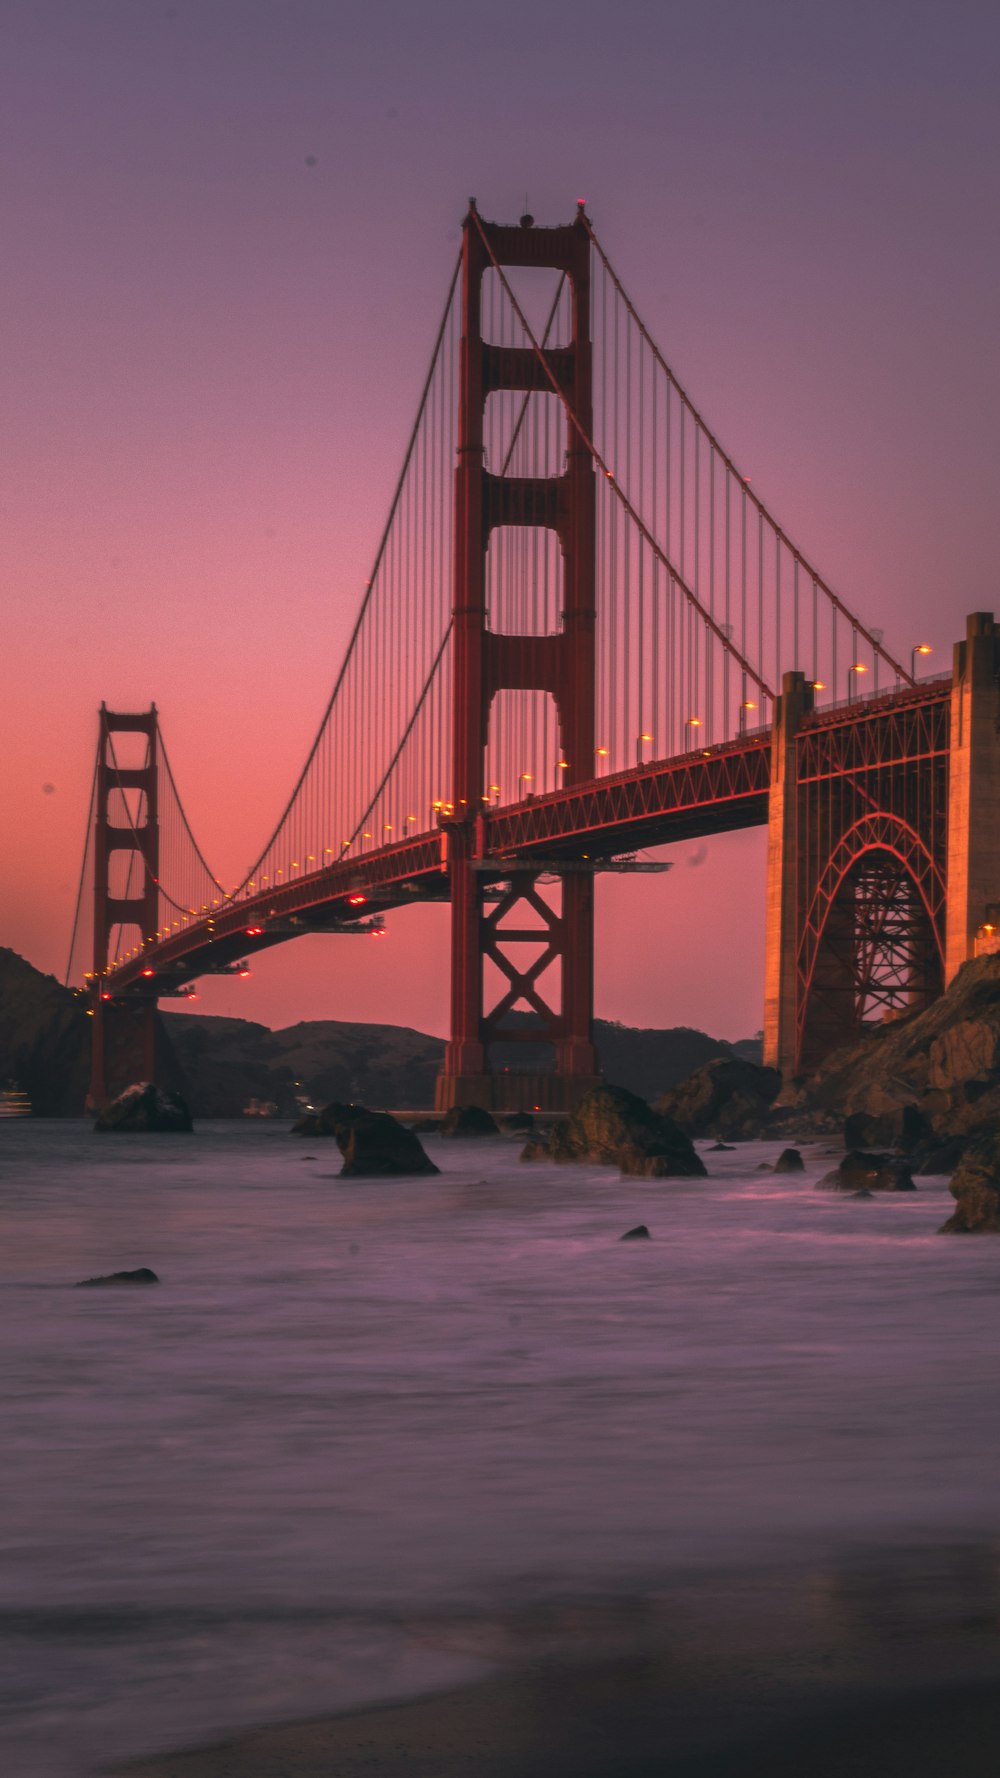 Golden Gate Bridge during sunset